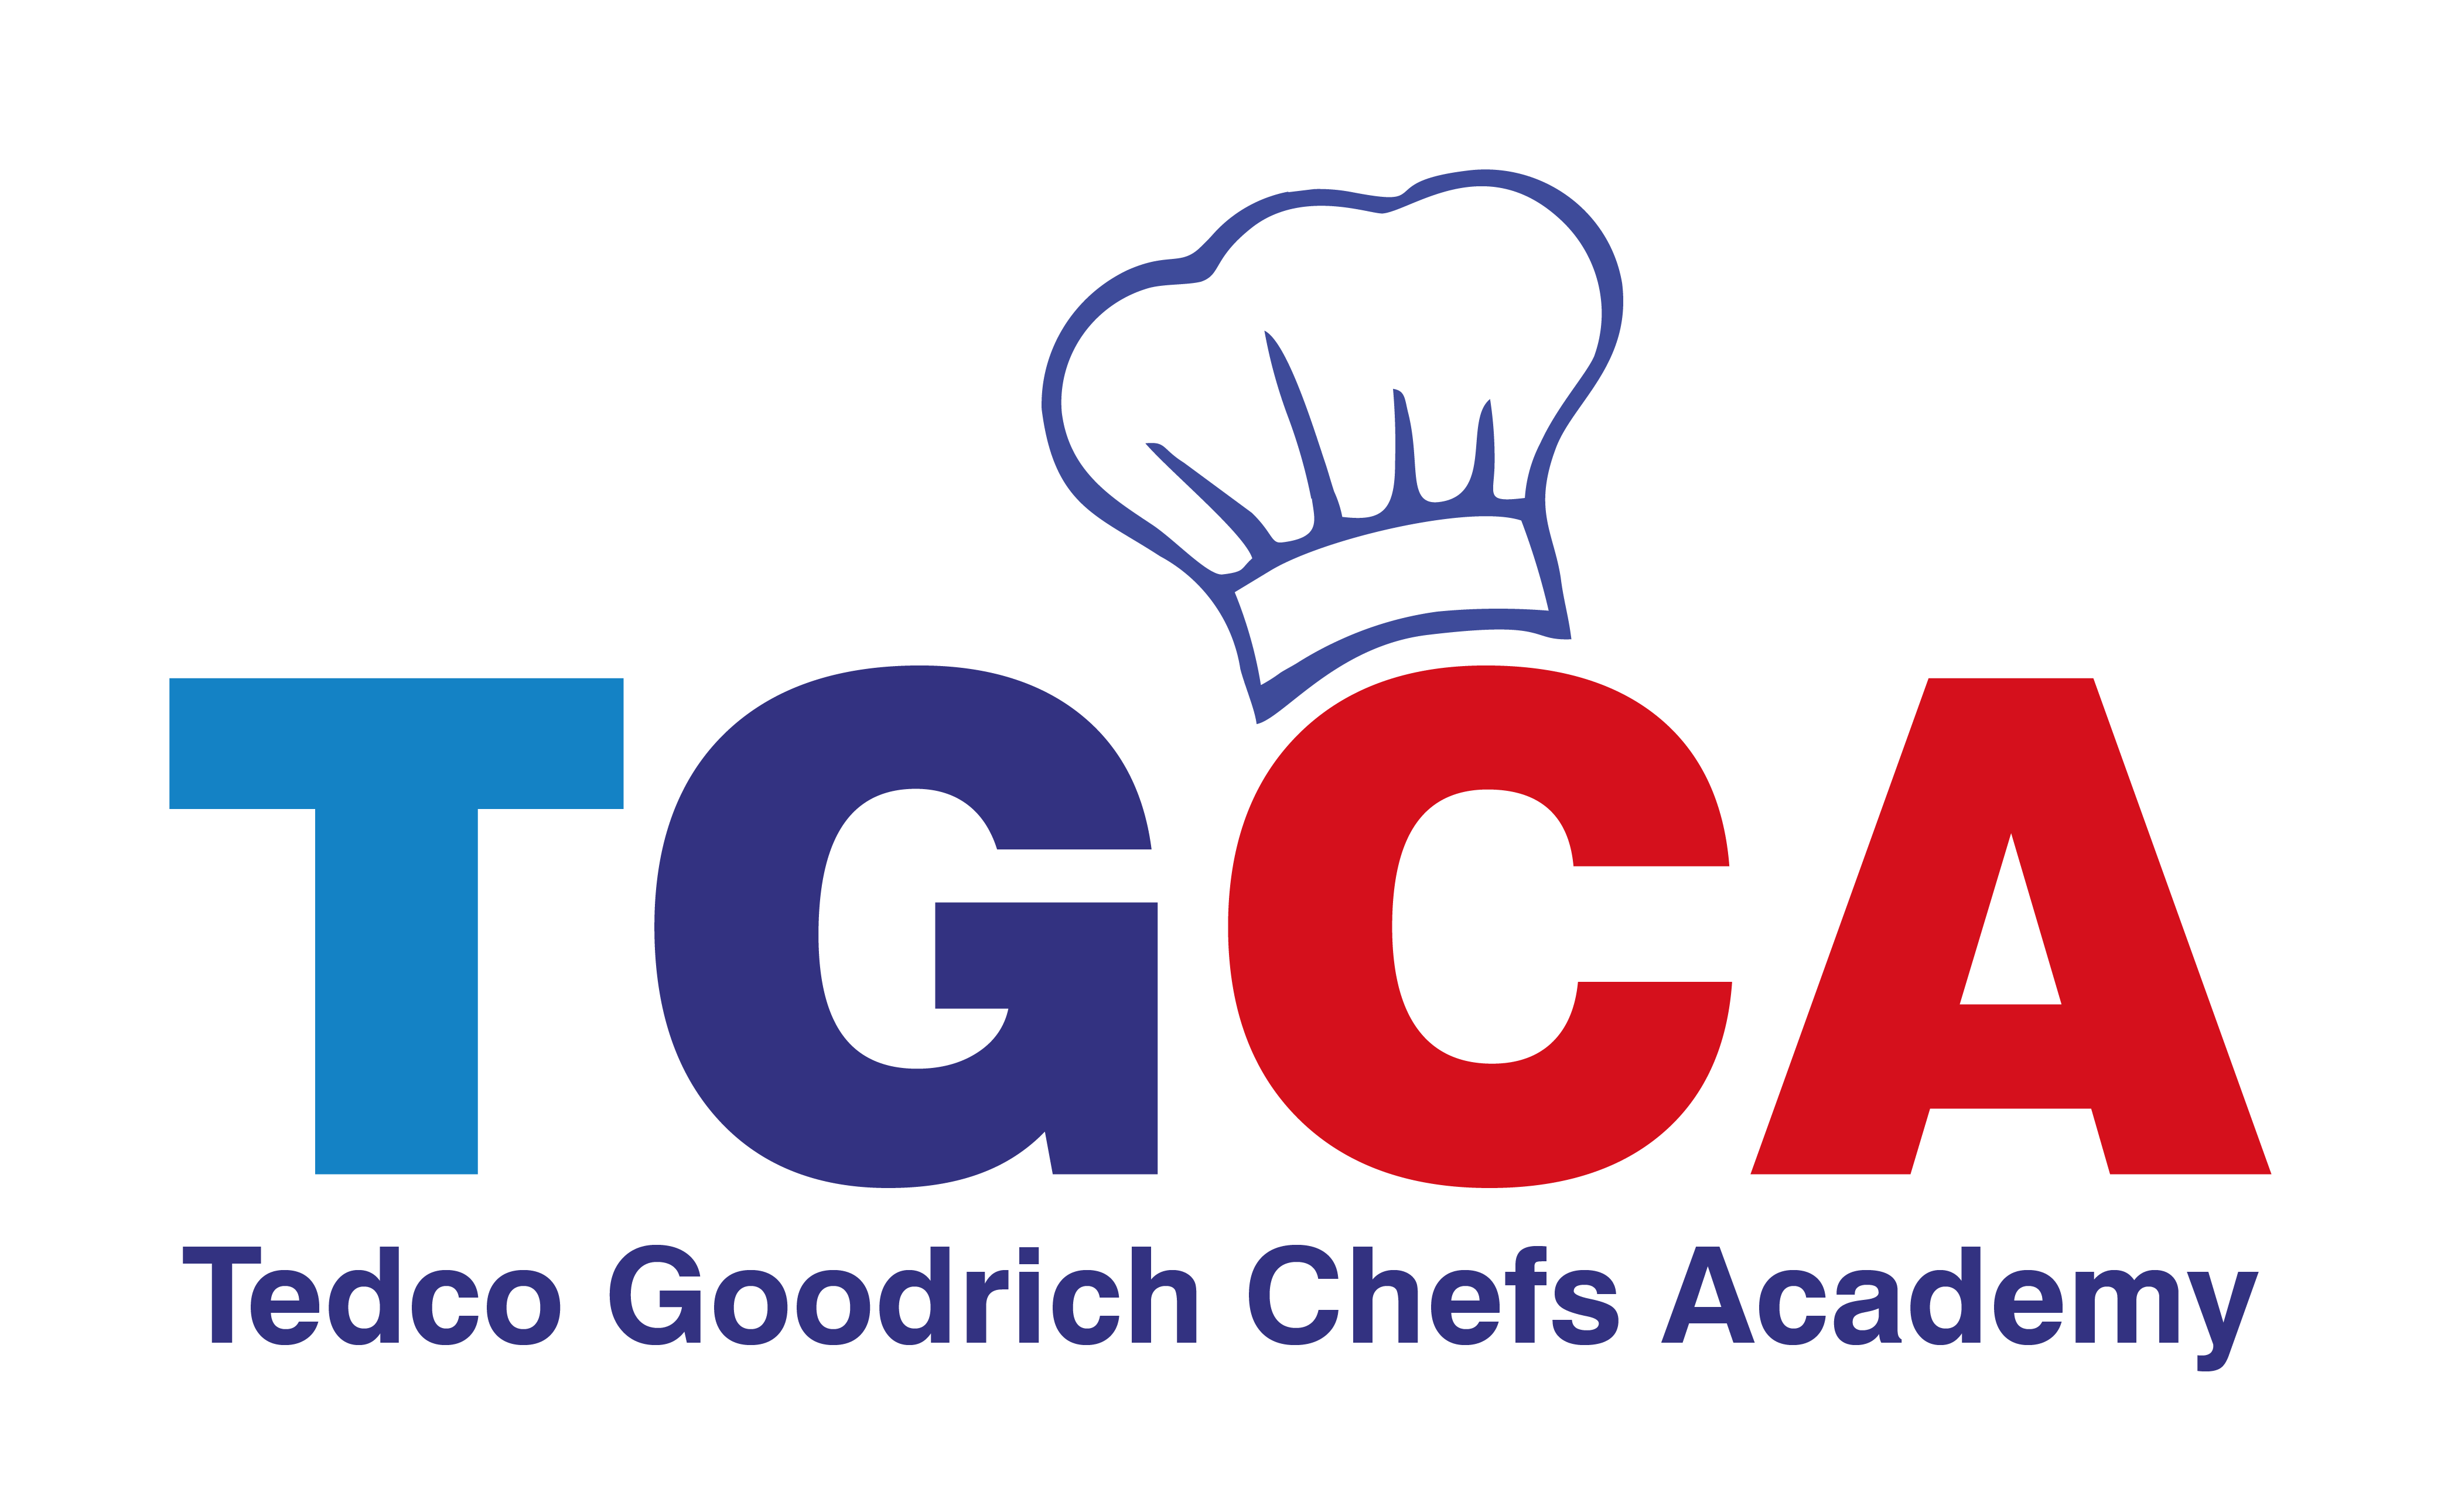 Tedco Goodrich Chefs Academy Logo